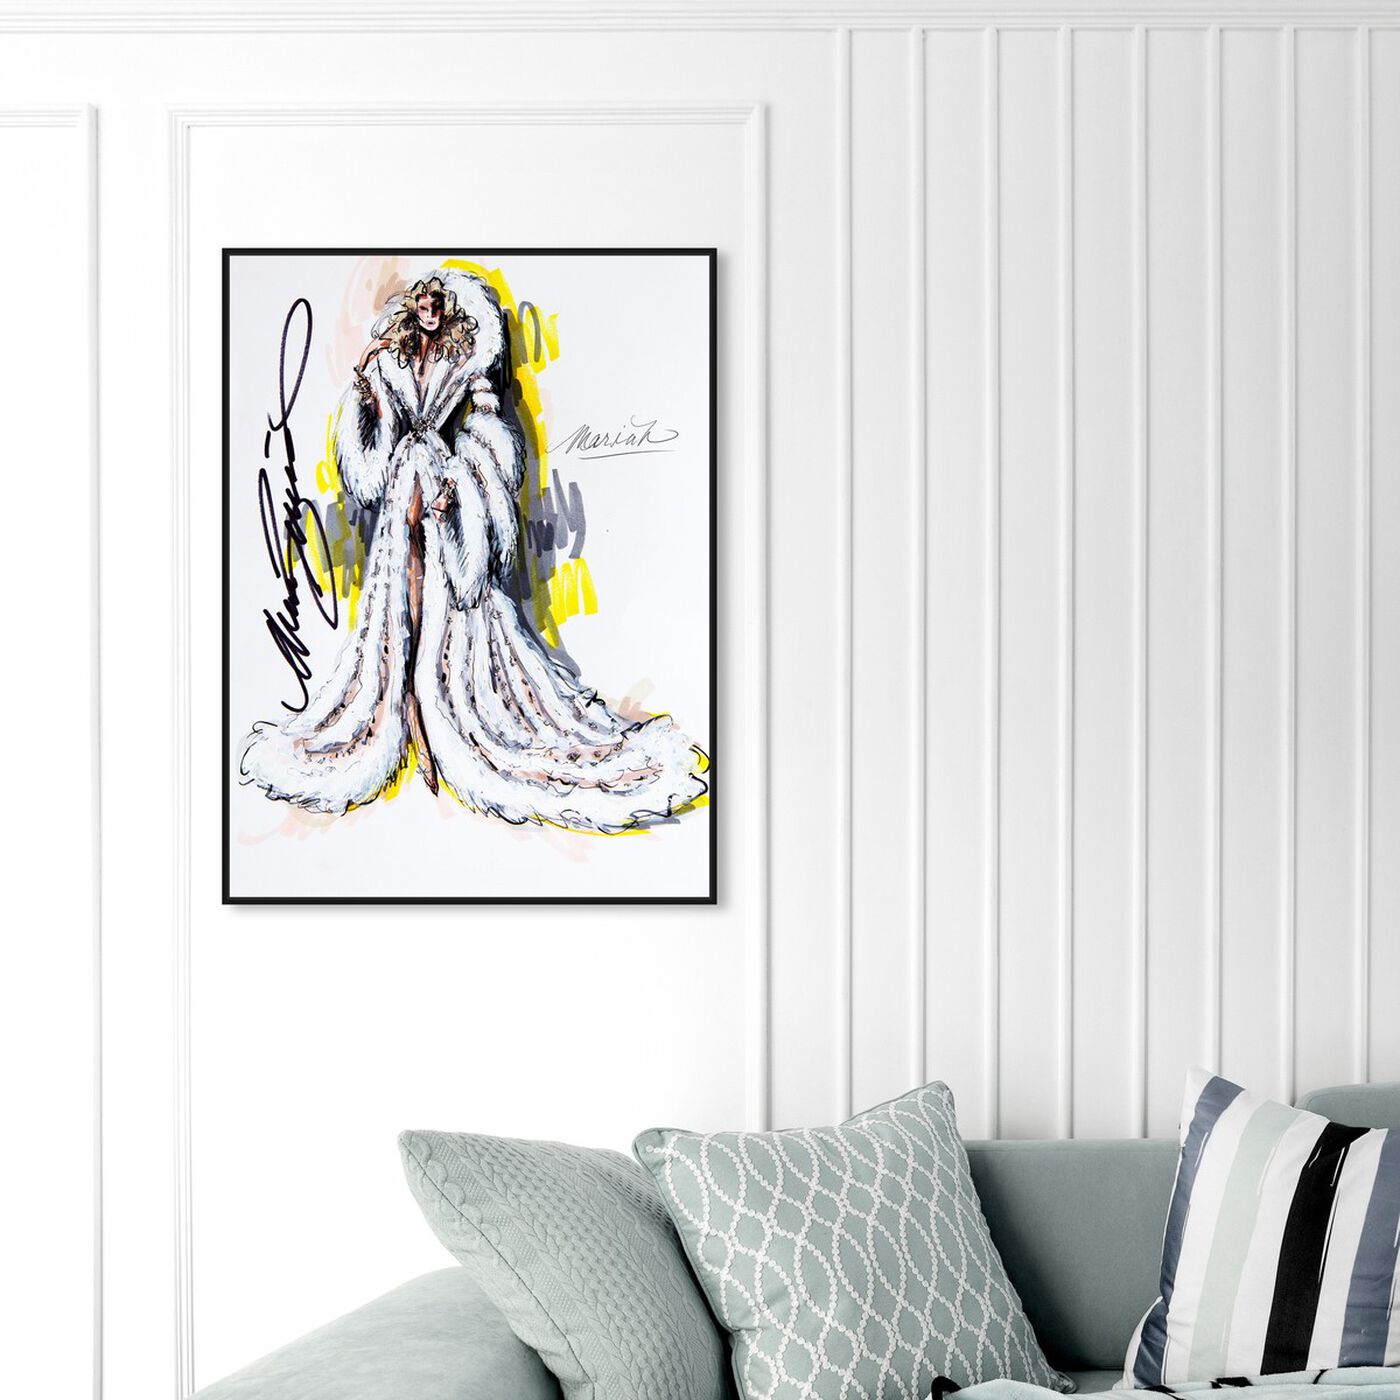 Hanging view of Mark Zunino - Mariah featuring fashion and glam and dress art.